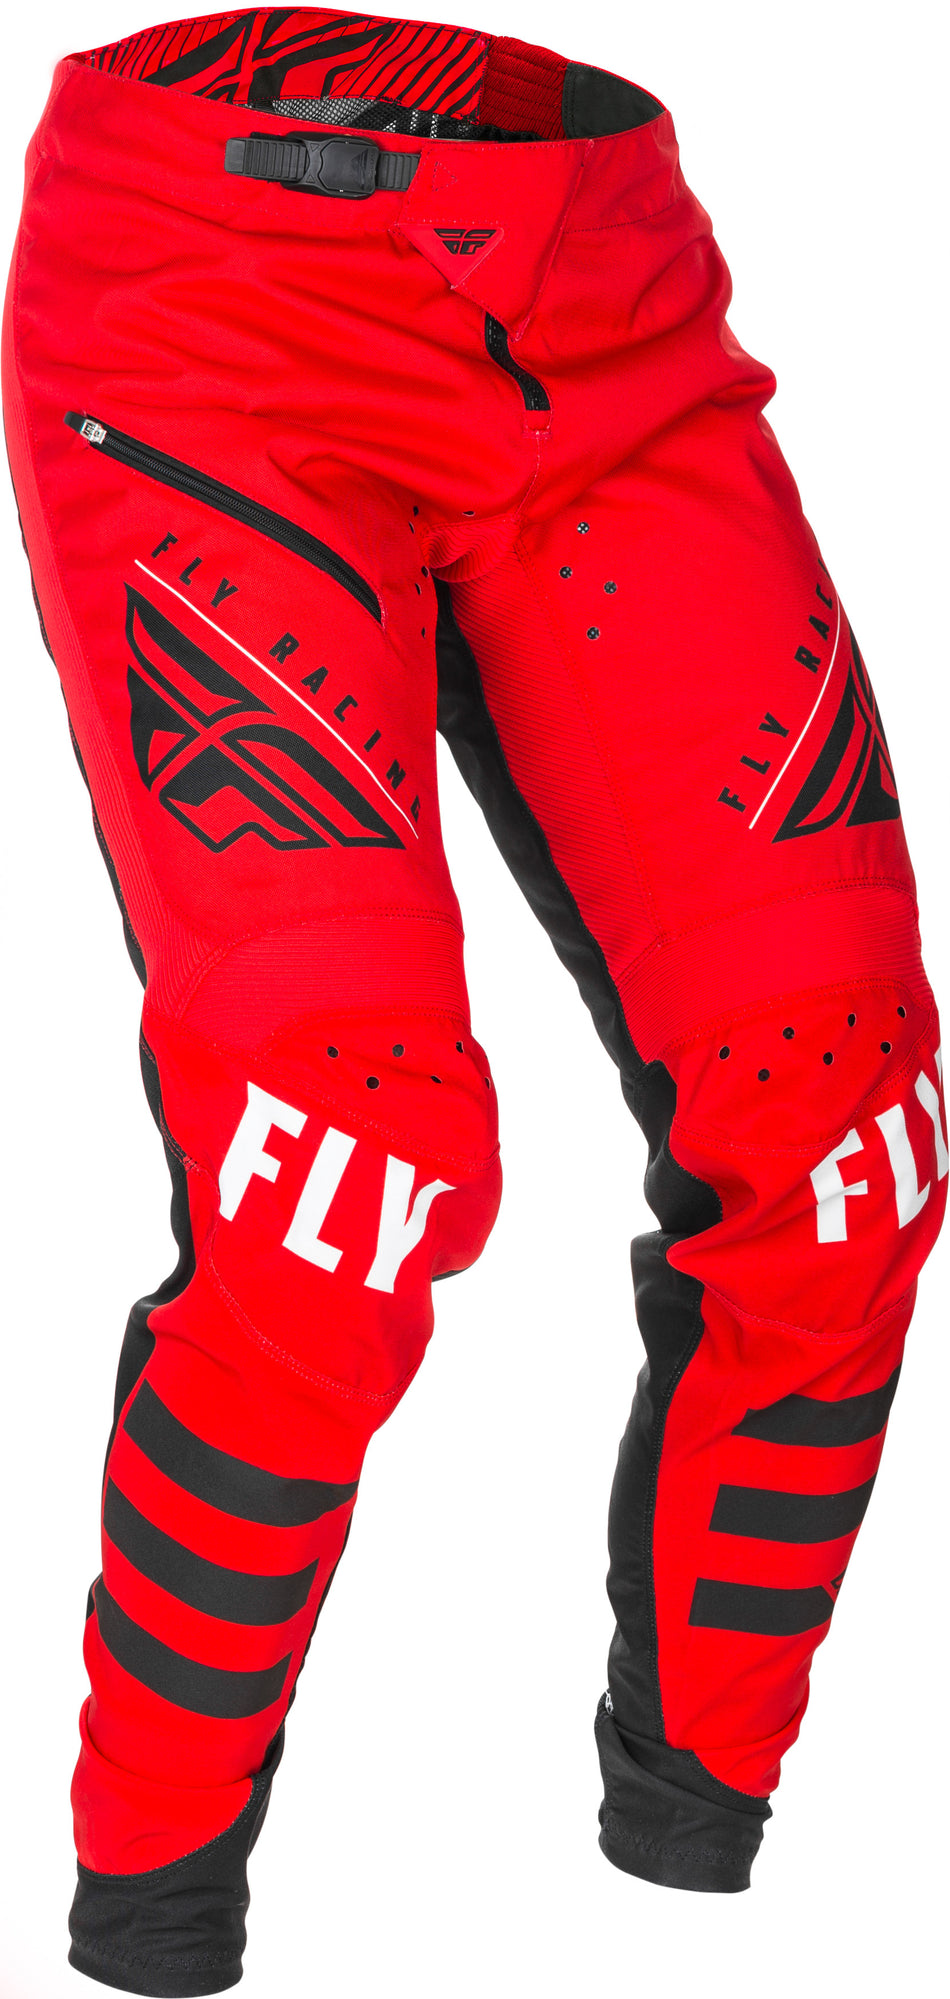 FLY RACING Kinetic Bicycle Pants Red/Black Sz 30 373-04230